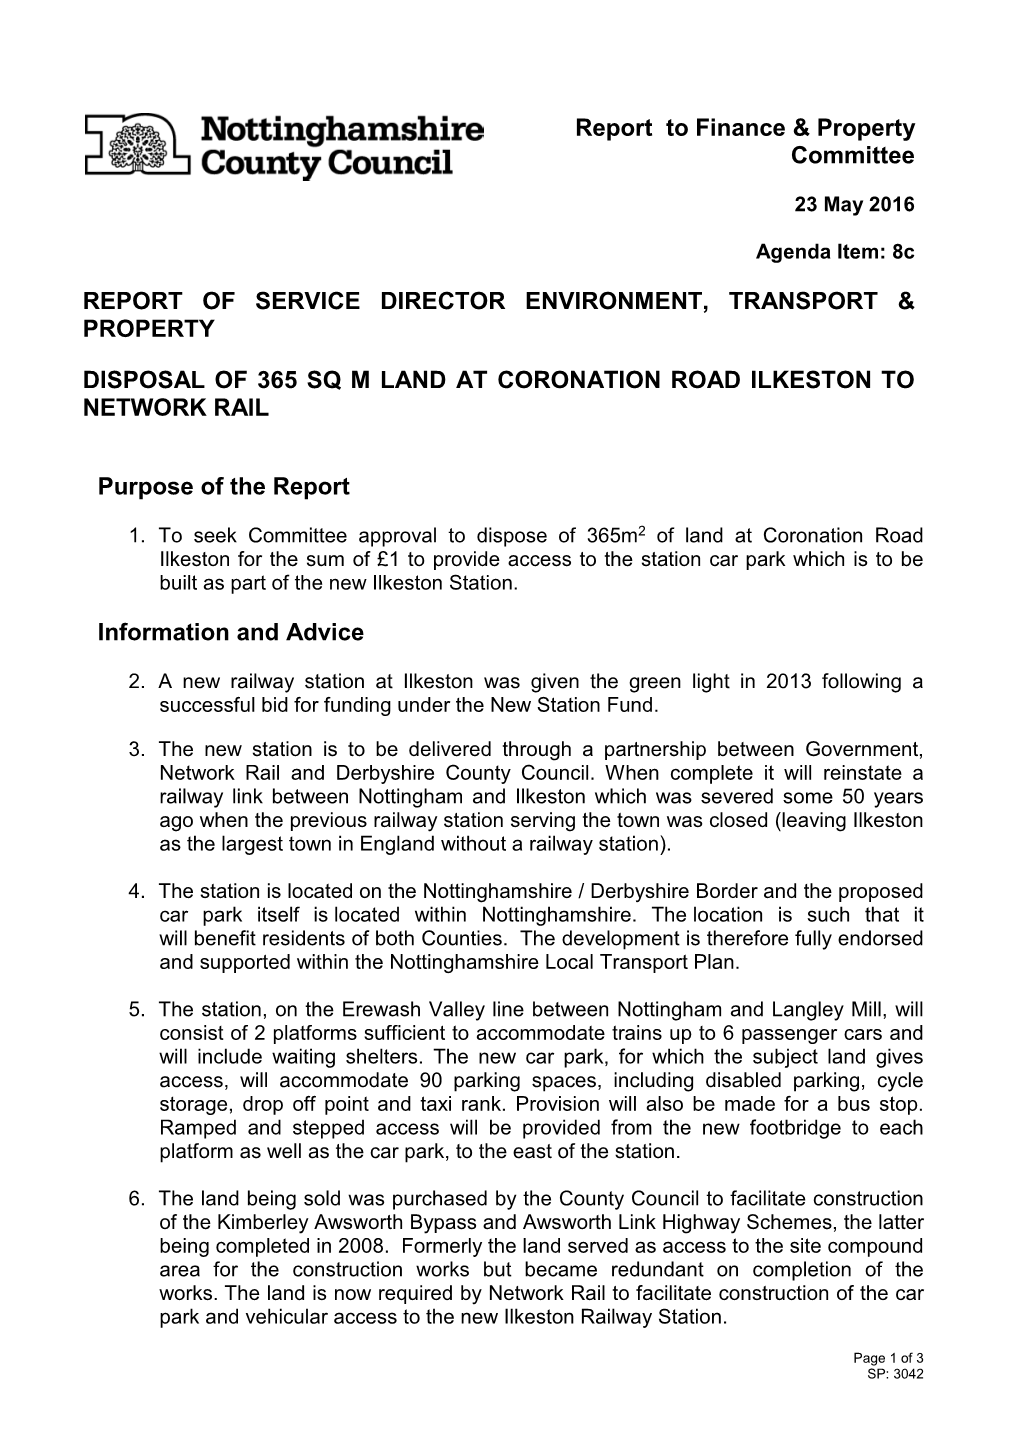 Disposal of 365 Sqm of Land at Coronation Road, Ilkeston To